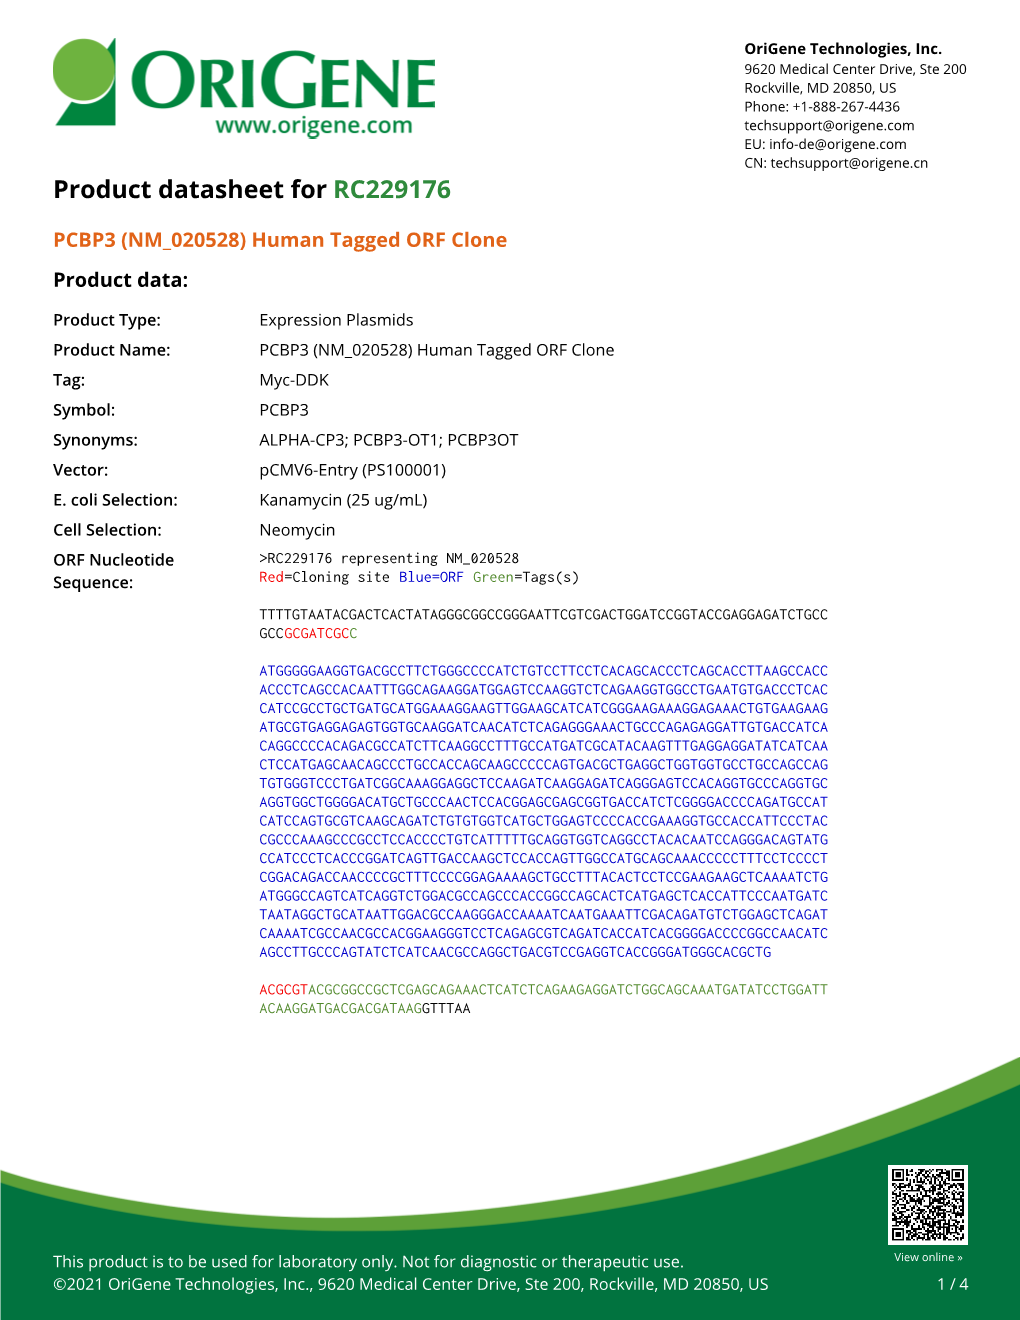 PCBP3 (NM 020528) Human Tagged ORF Clone – RC229176